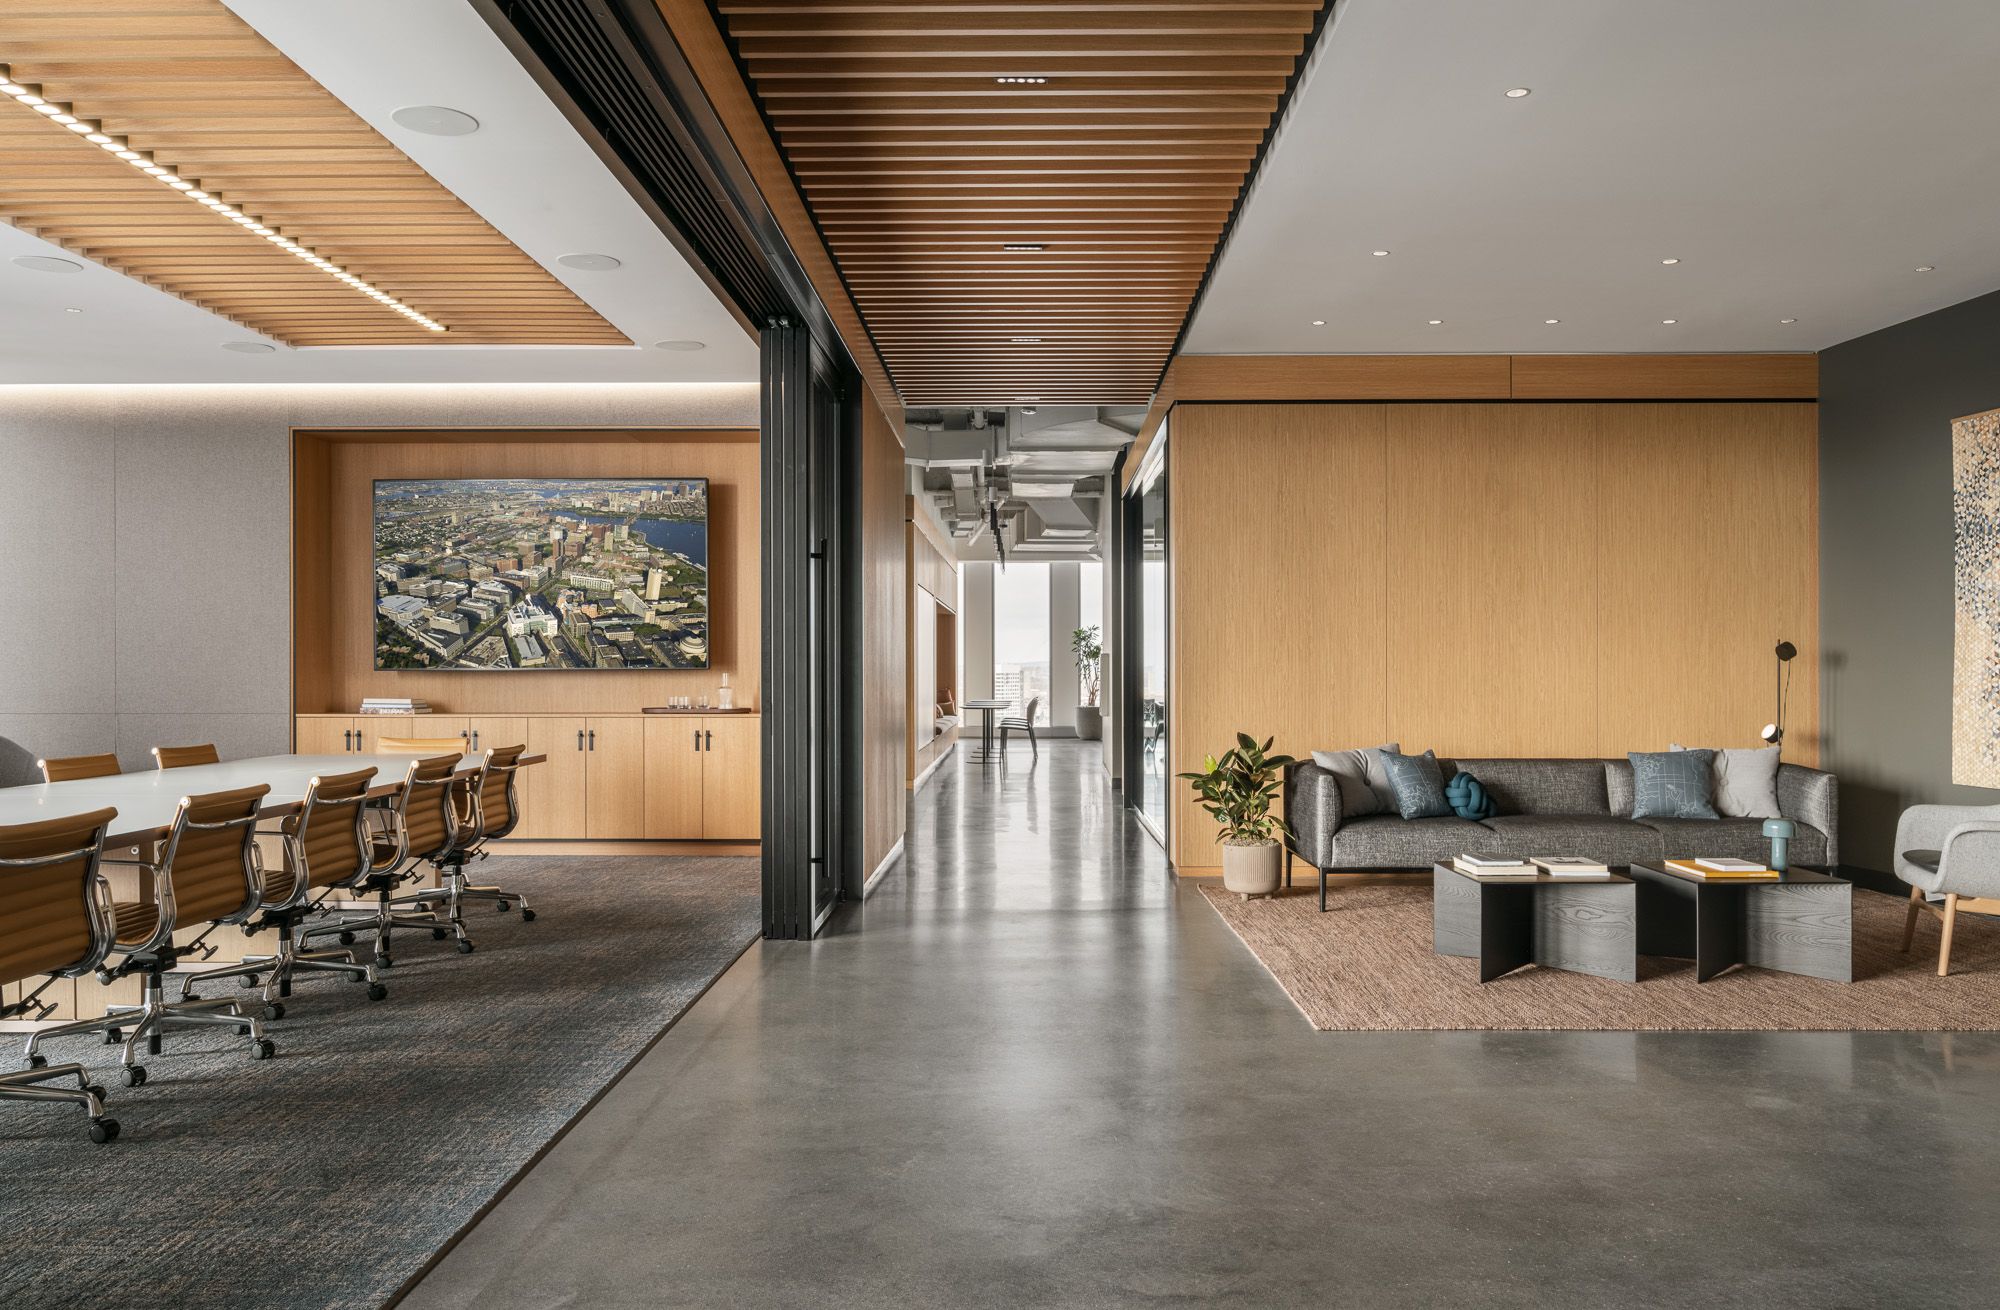 BioMed房地产办公室-波士顿|ART-Arrakis | 建筑室内设计的创新与灵感